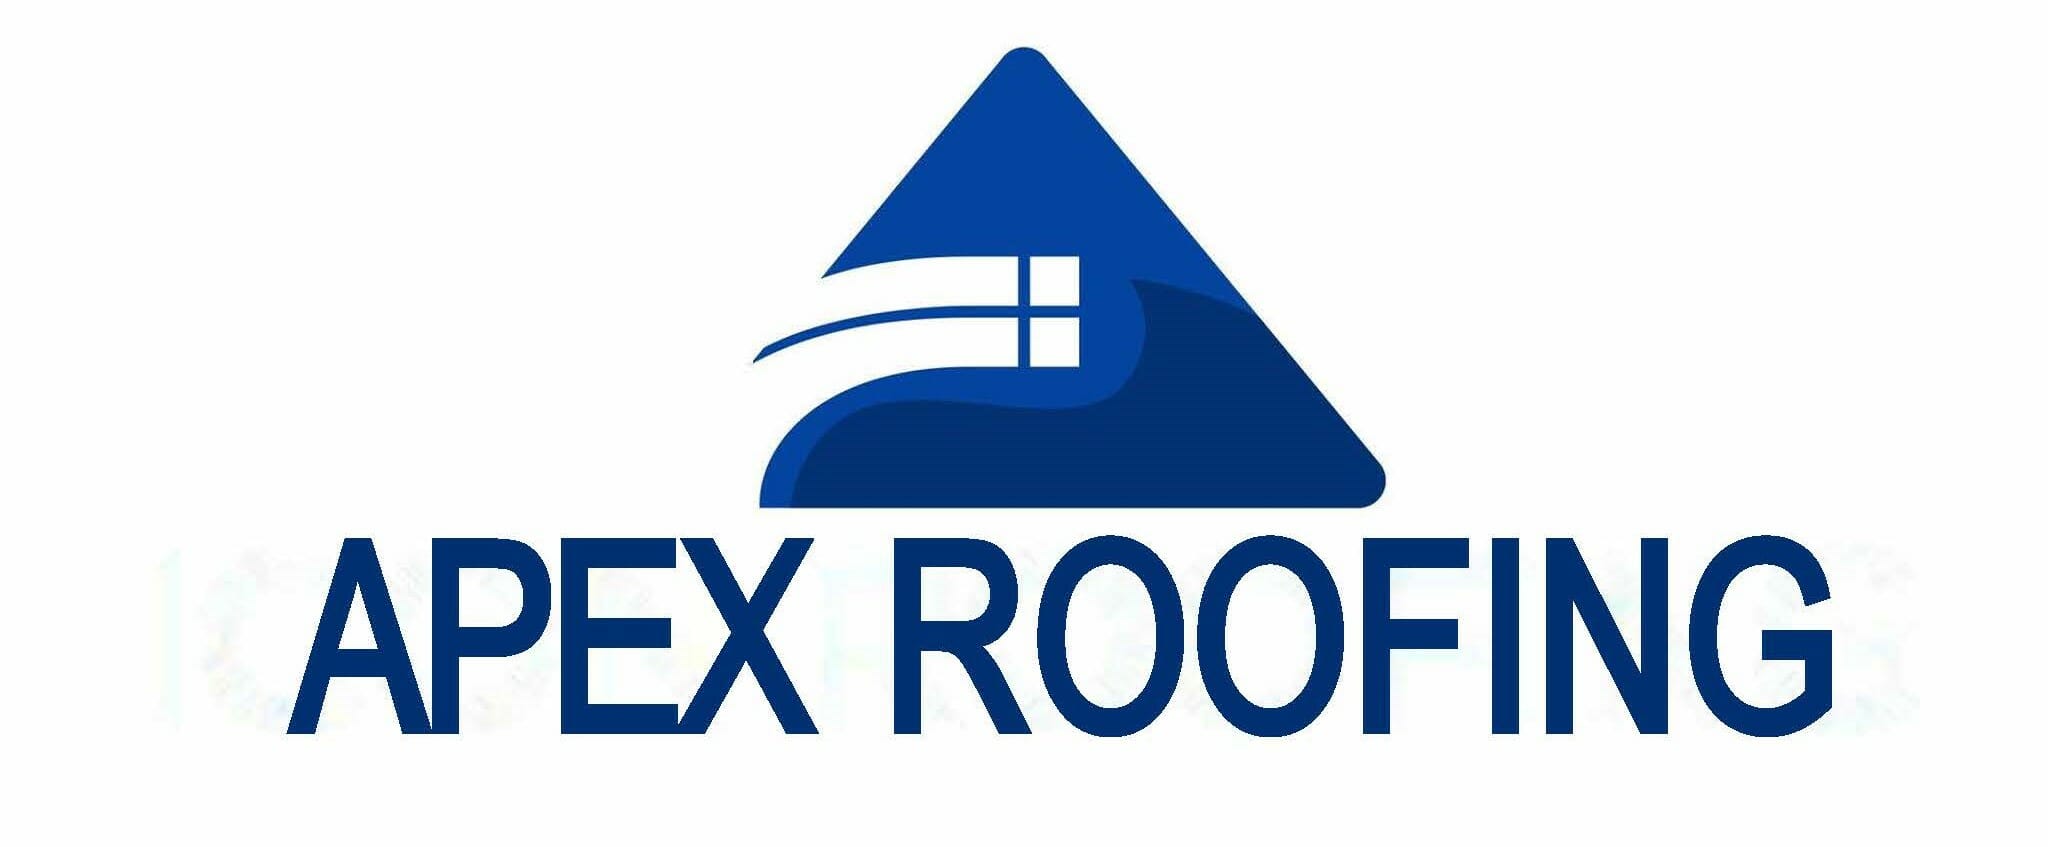 Apex Roofing - Spokane roofers